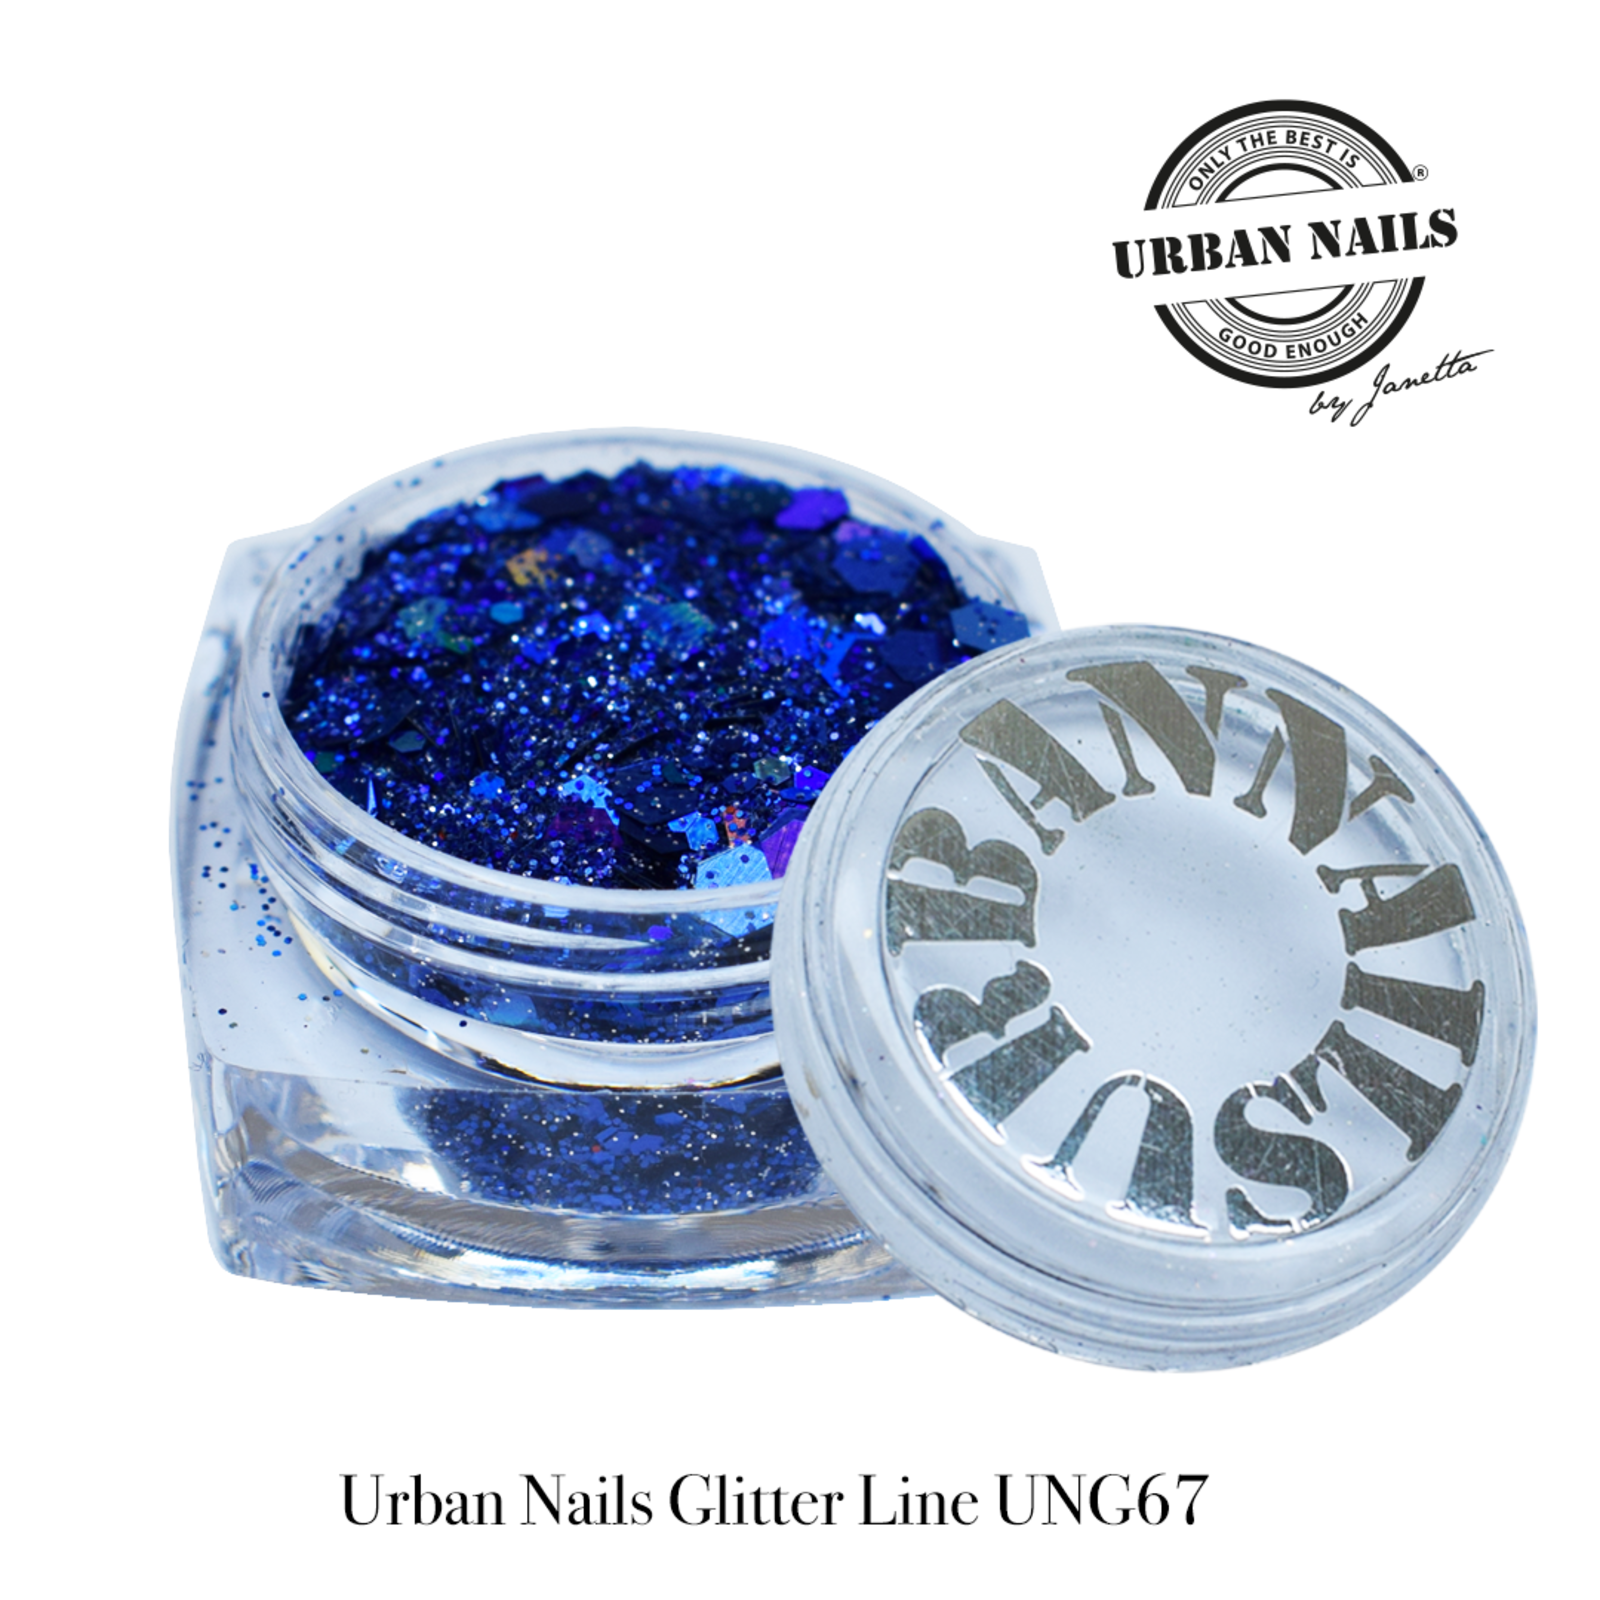 Urban nails Glitter Line  UNG67